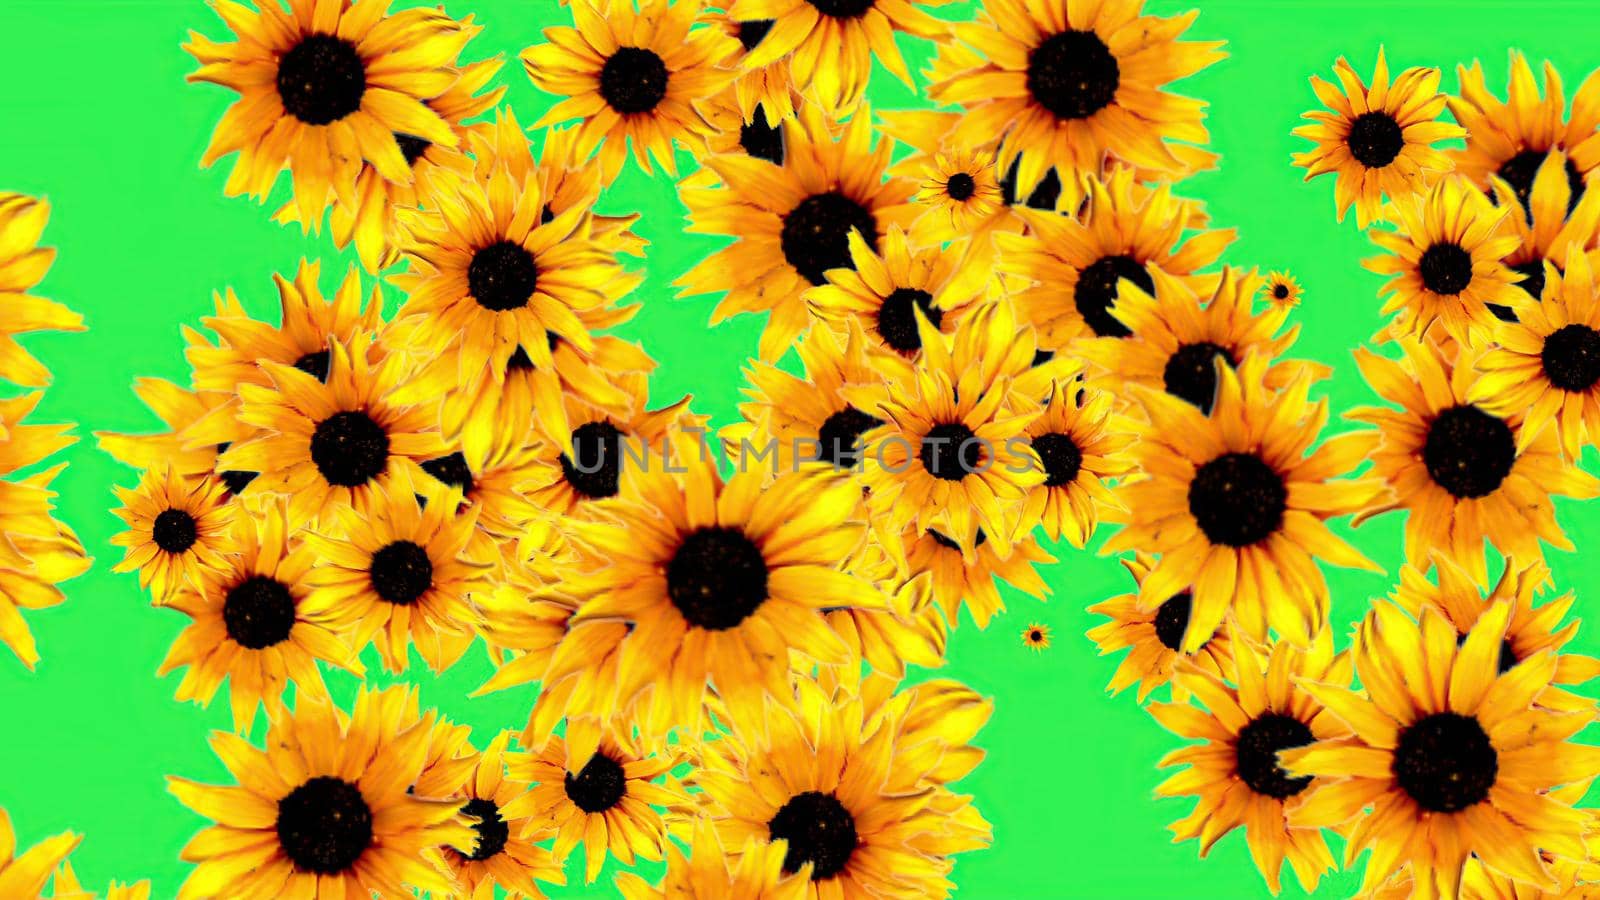 3d illustration - Sunflowers background pattern on green screen  by vitanovski